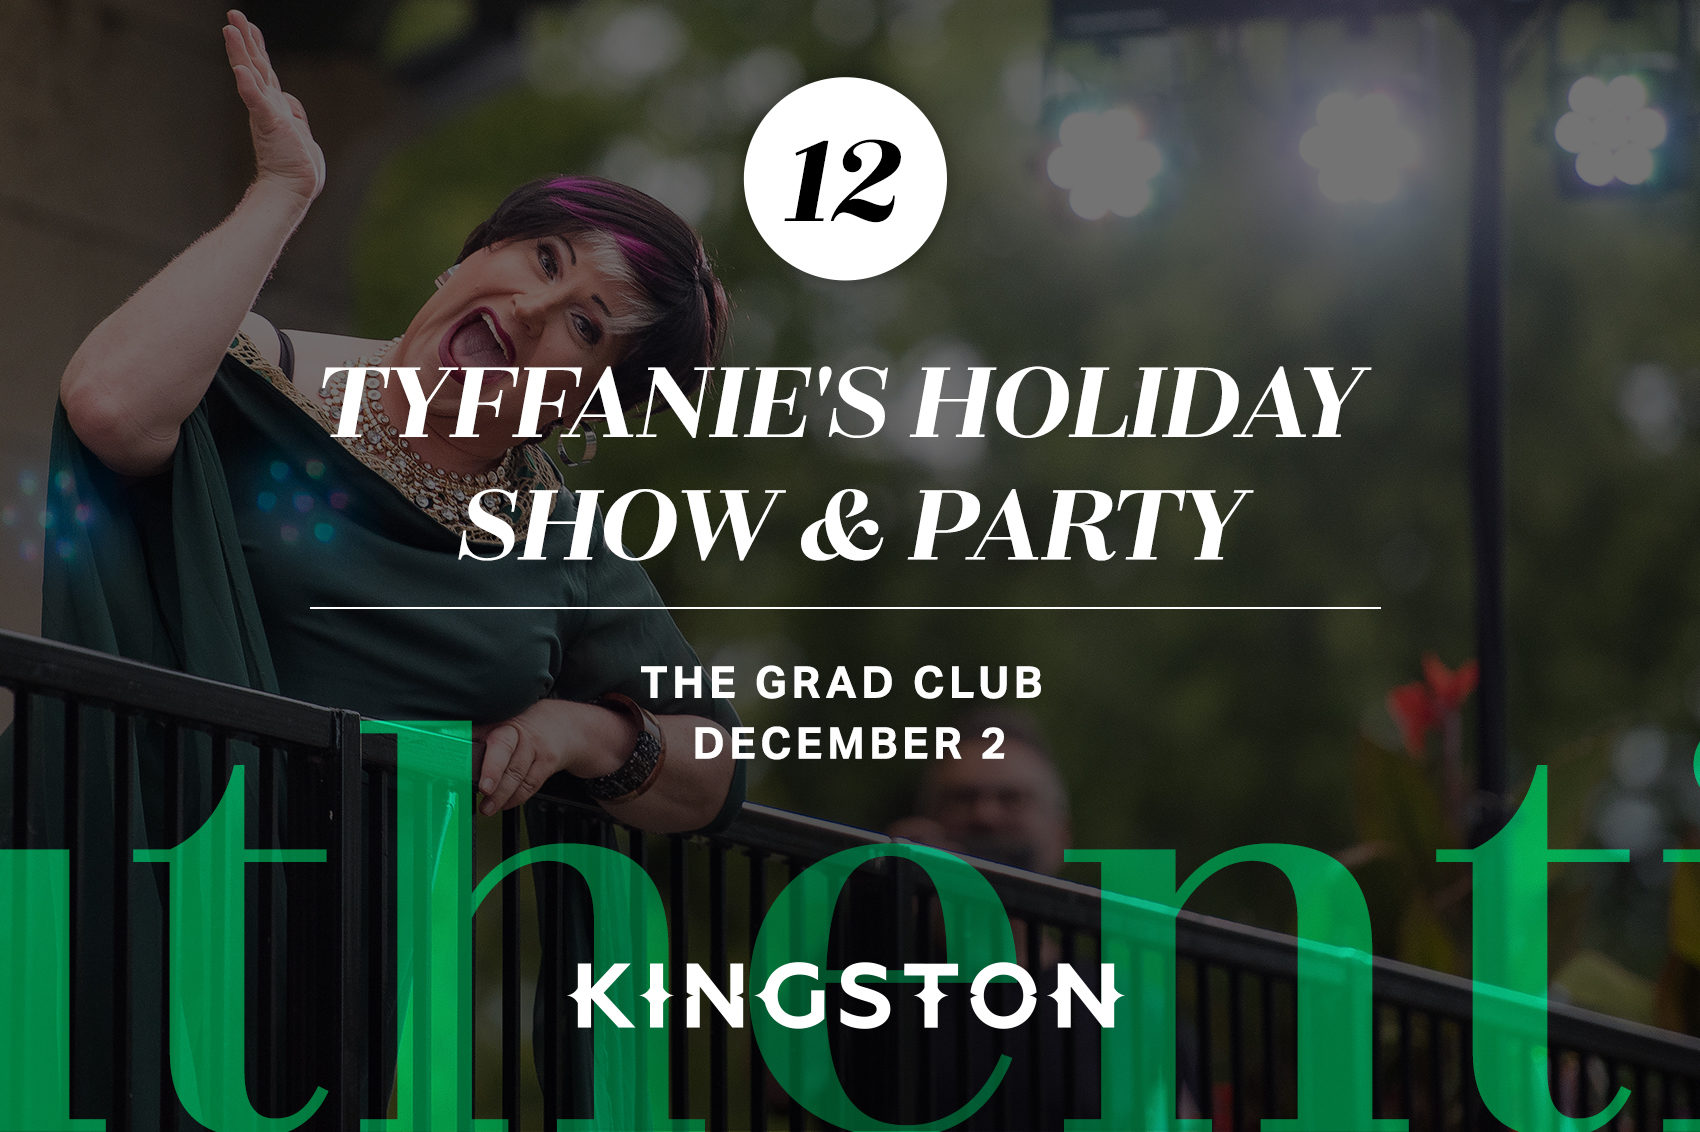 Tyffanie's Holiday show & party